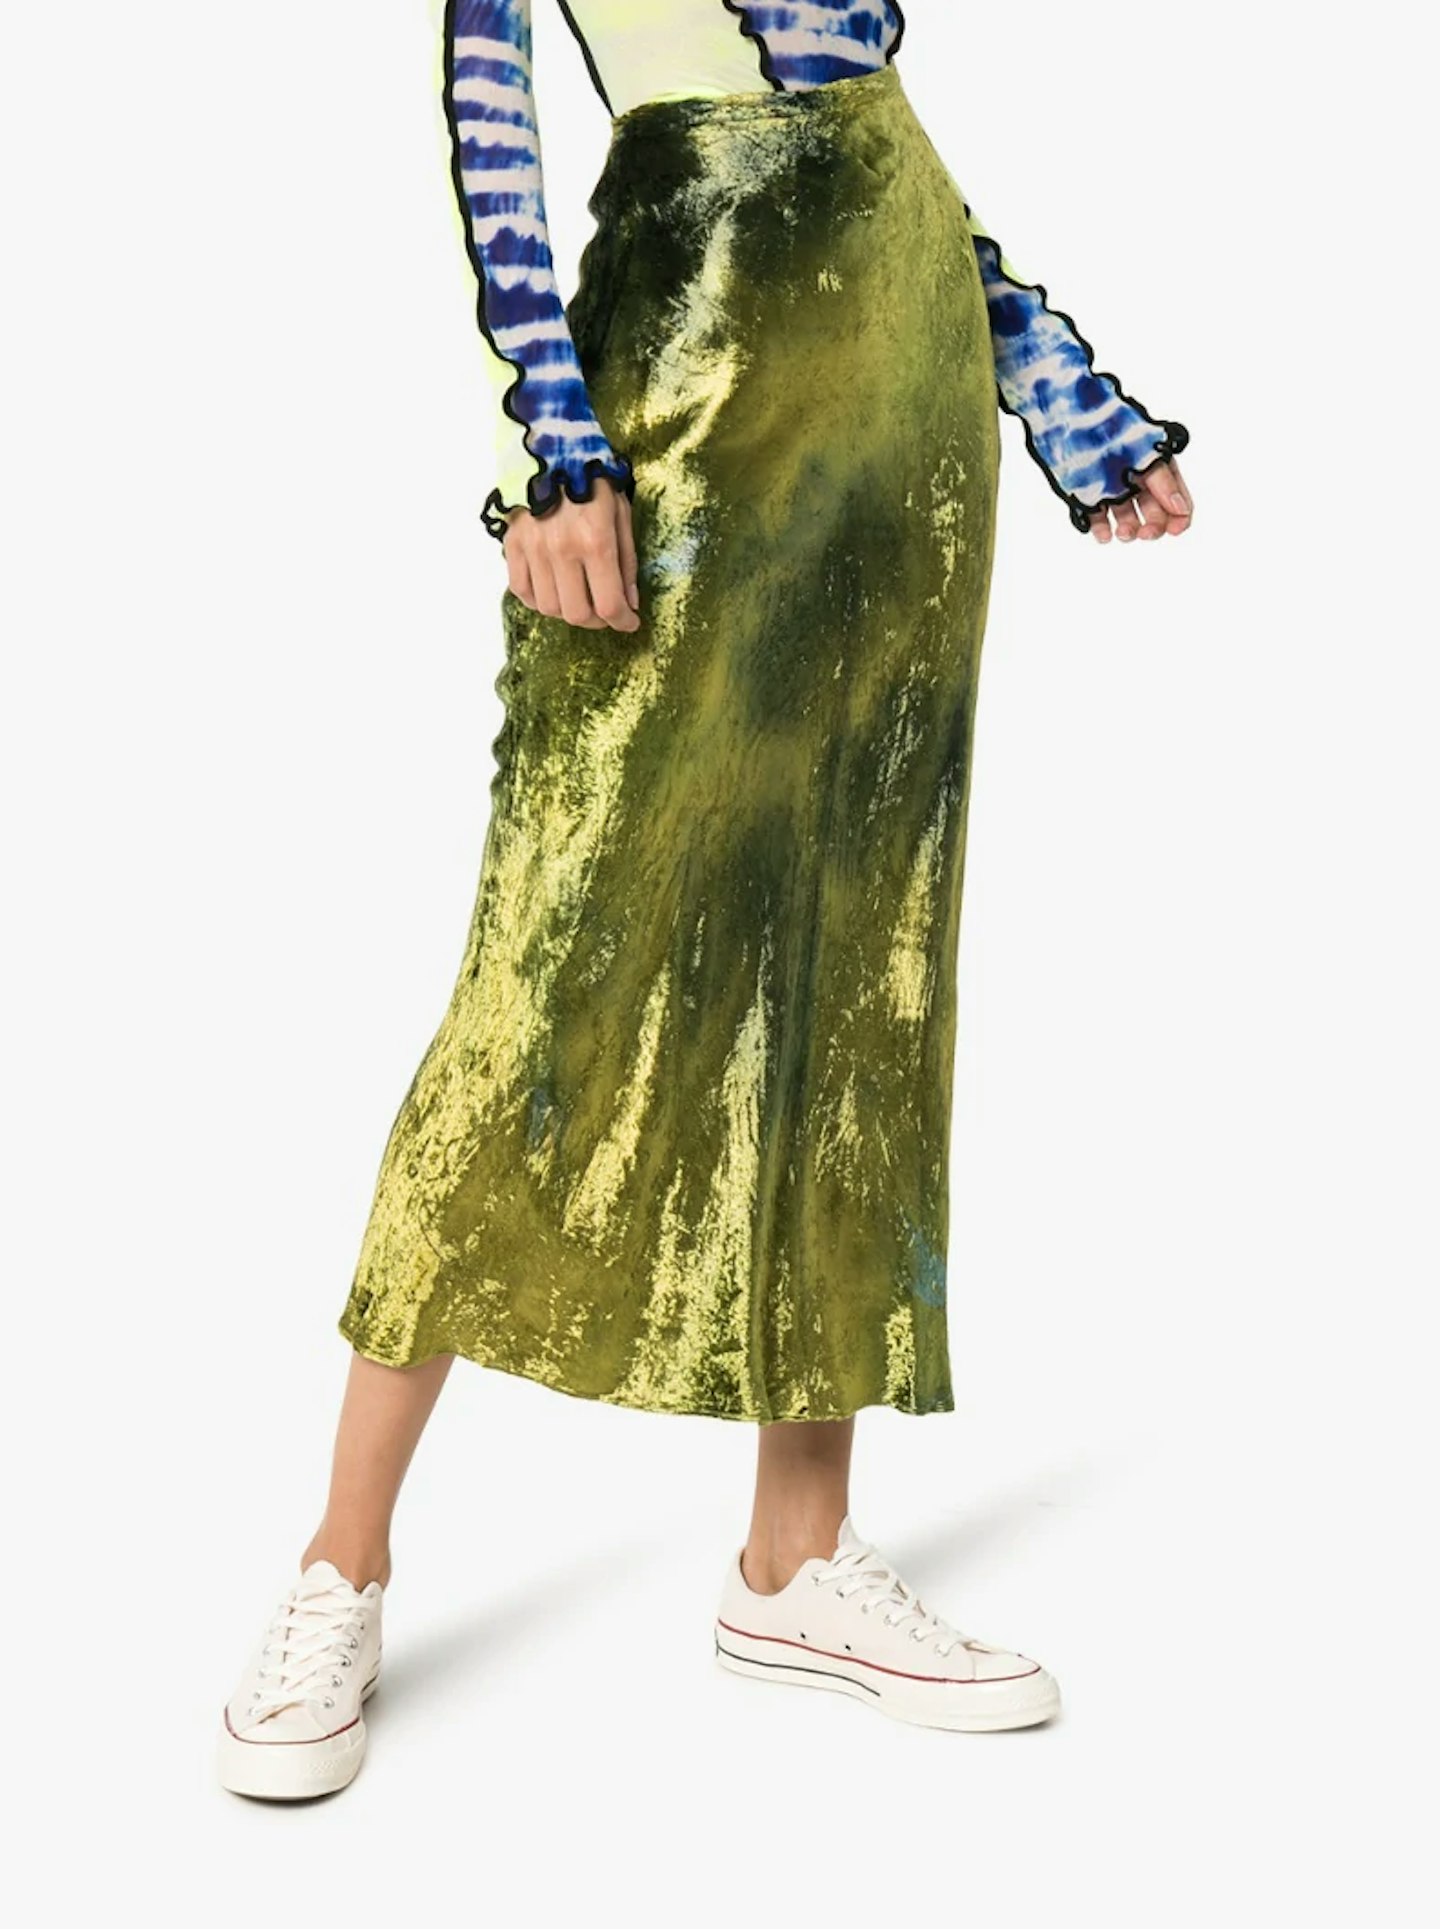 Collina Strada, Velvet Tie-Dye Midi Skirt, £280